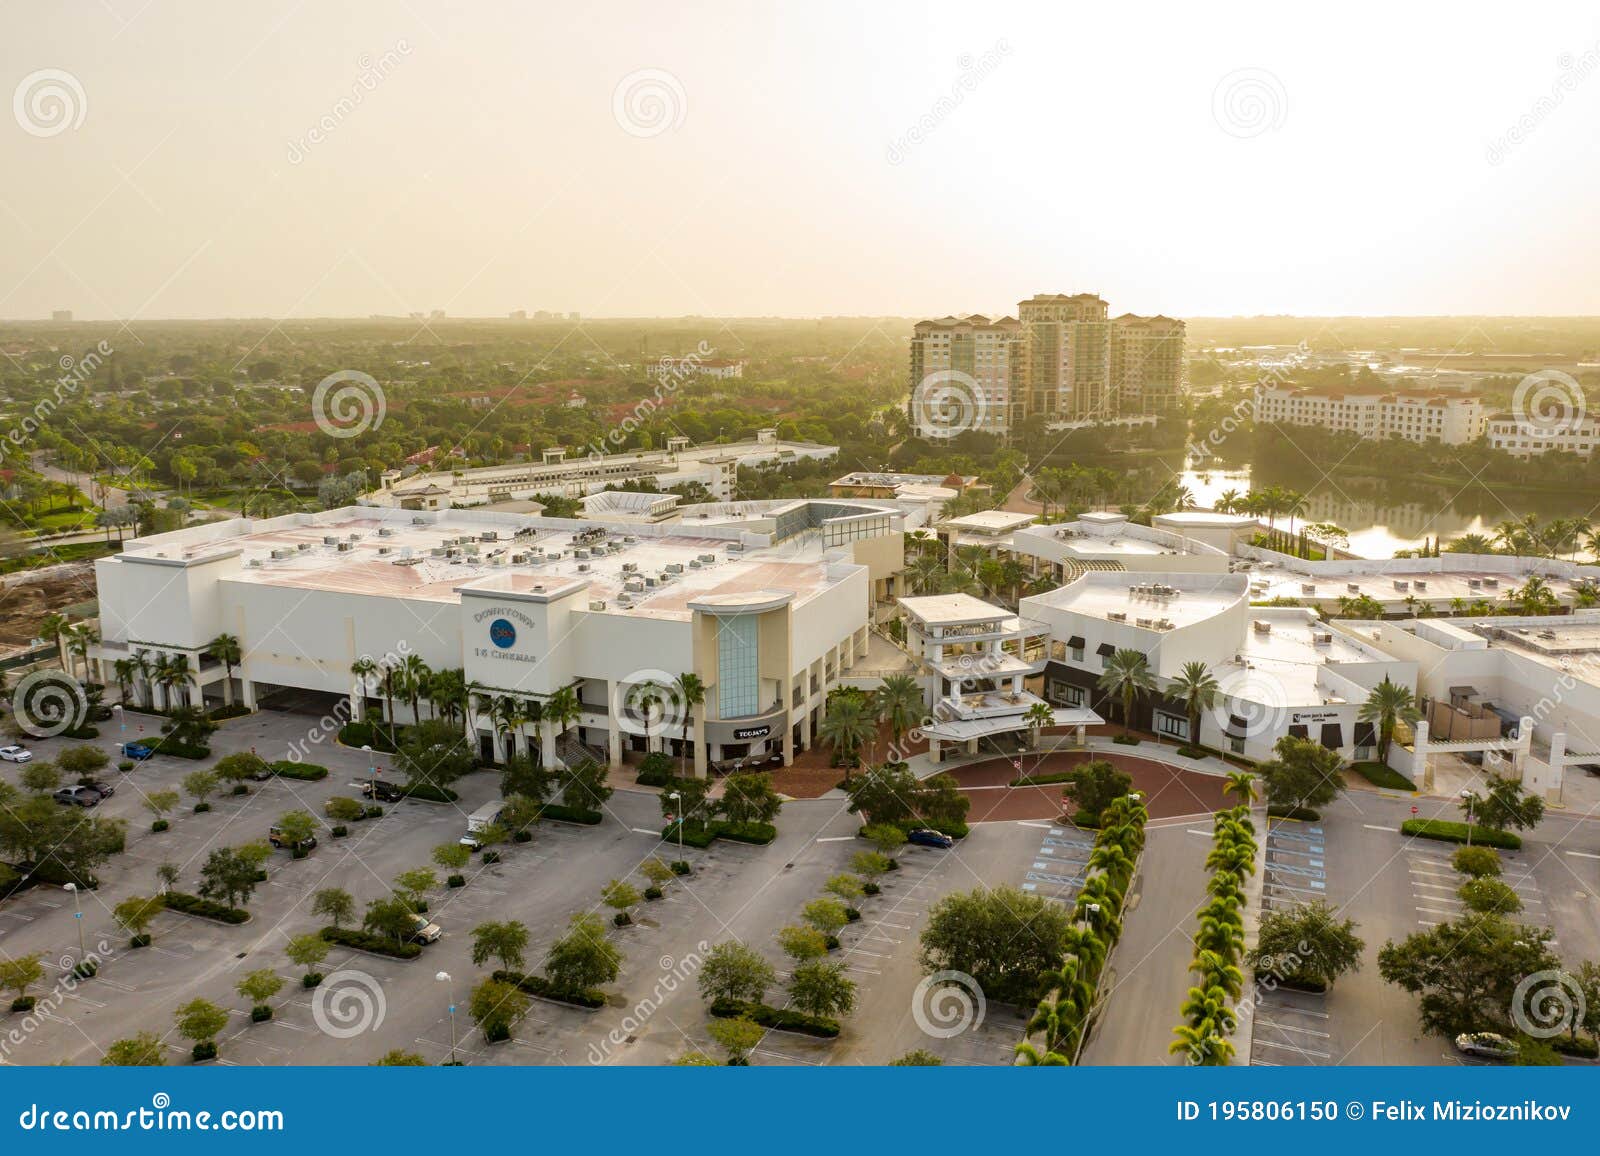 Aerial Drone Photo of the Gardens Mall Palm Beach FL USA at